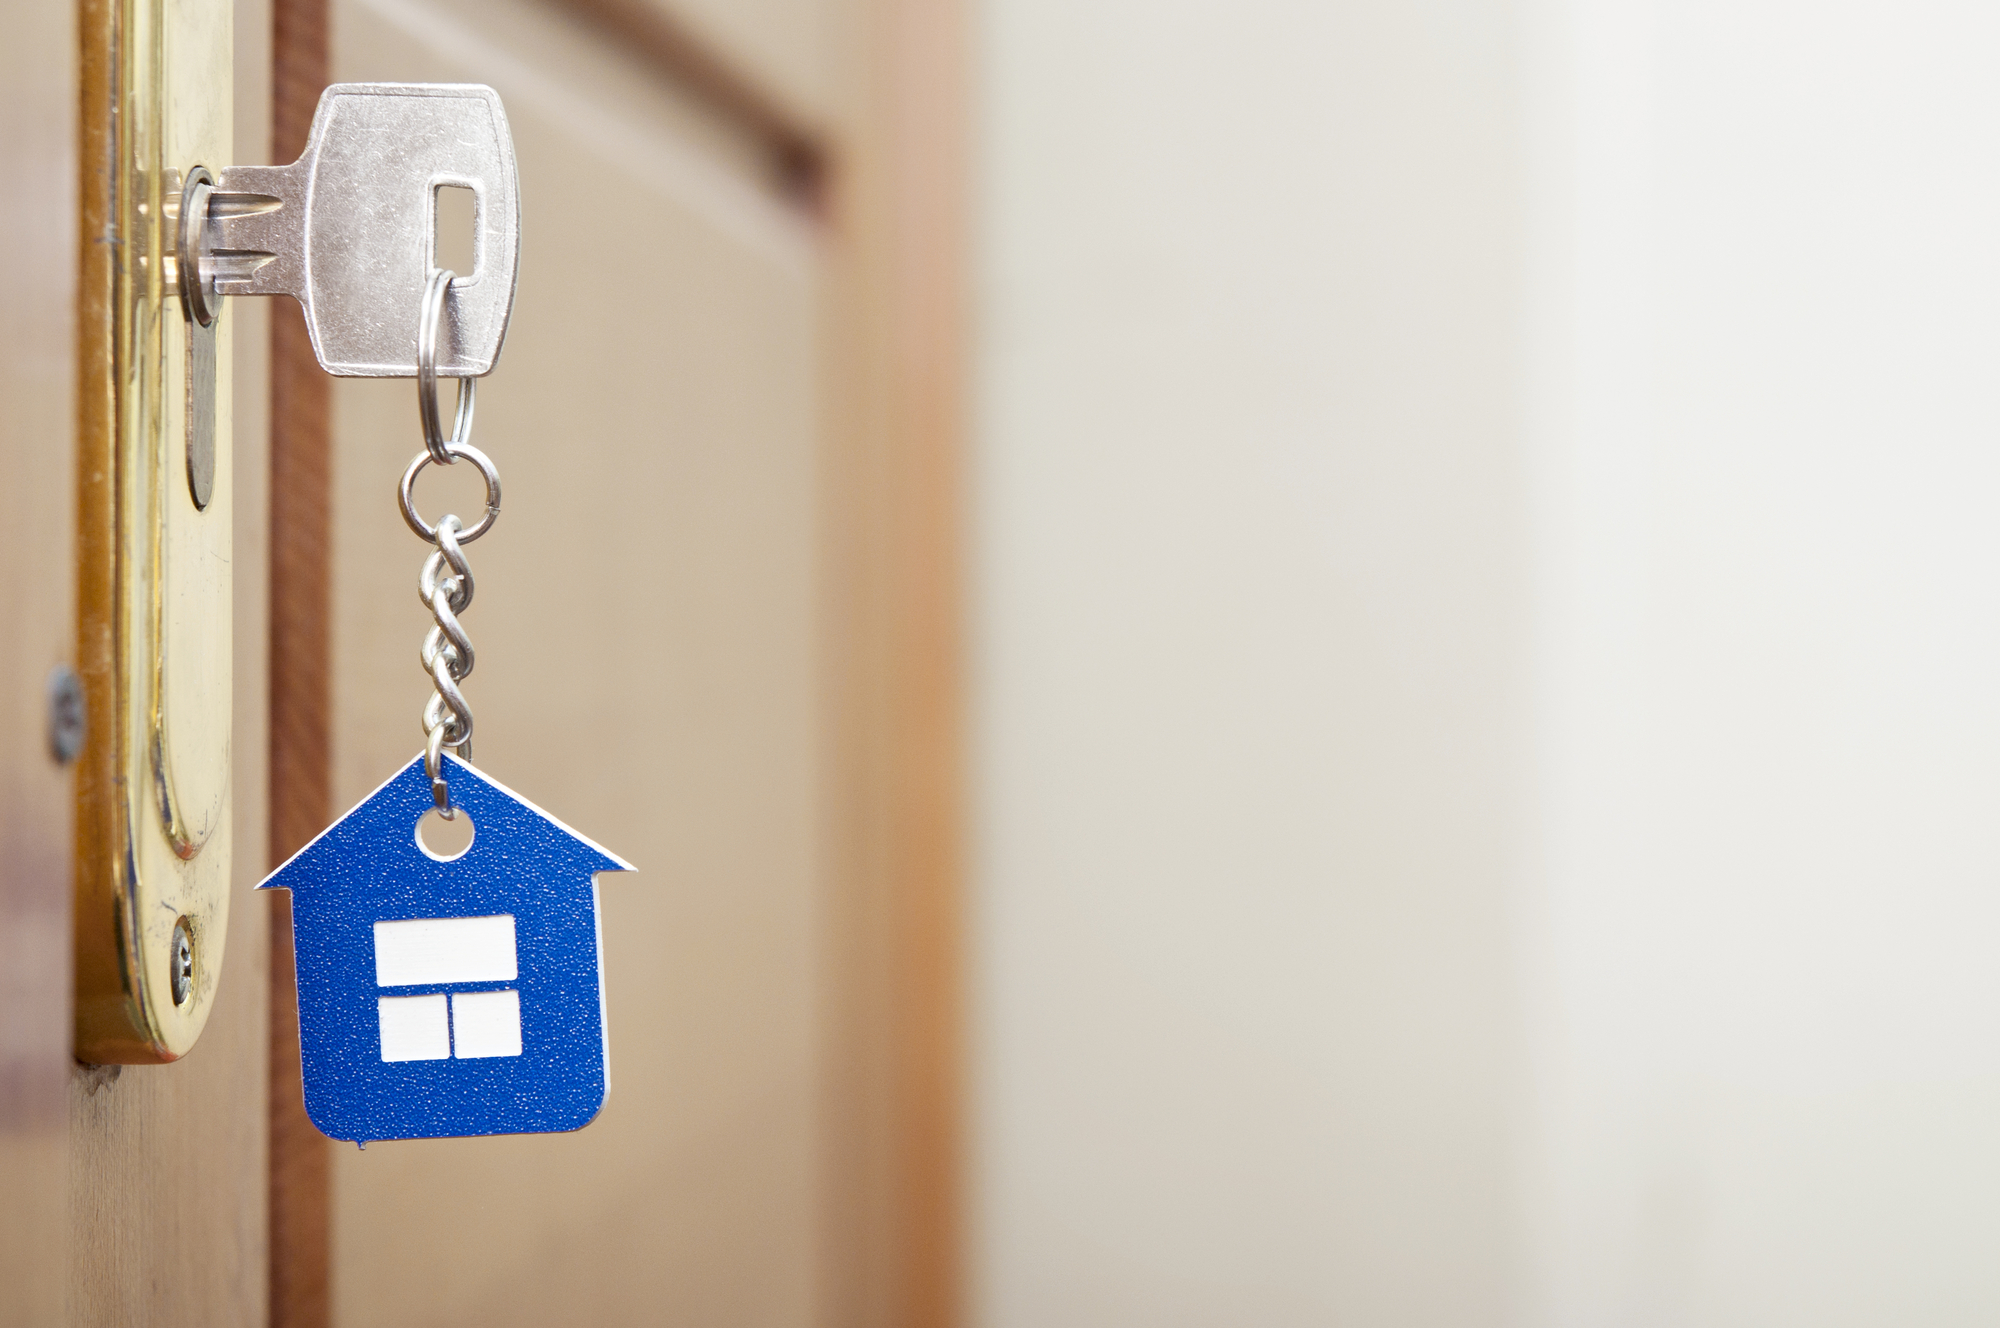 A blue house key hangs on a wooden door.